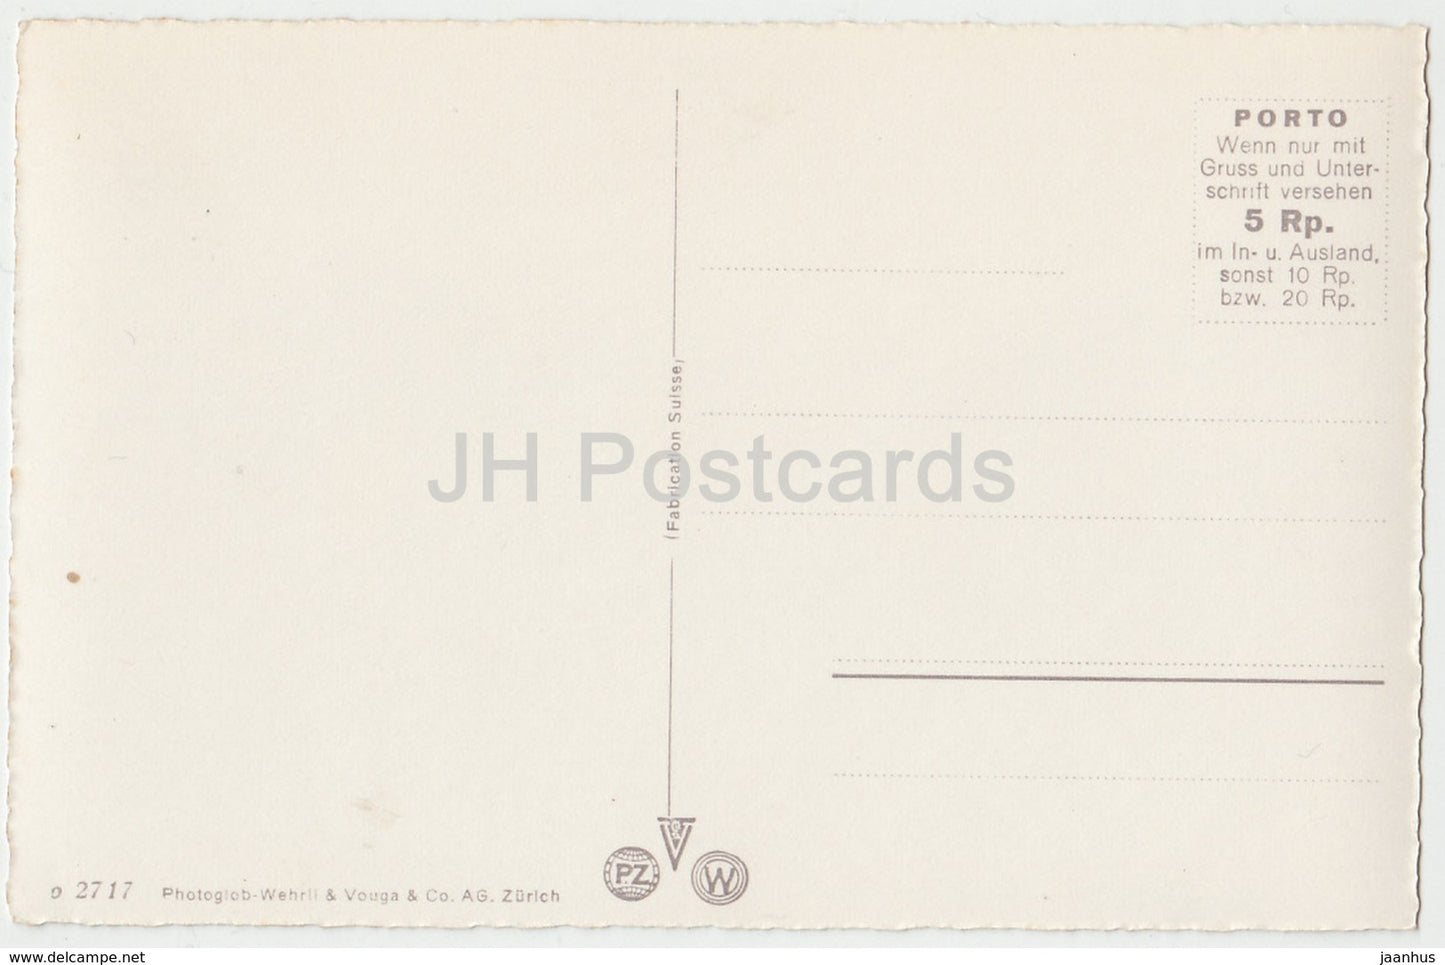 Oberalpsee 2028 m mit Hotel - Switzerland - old postcard - unused